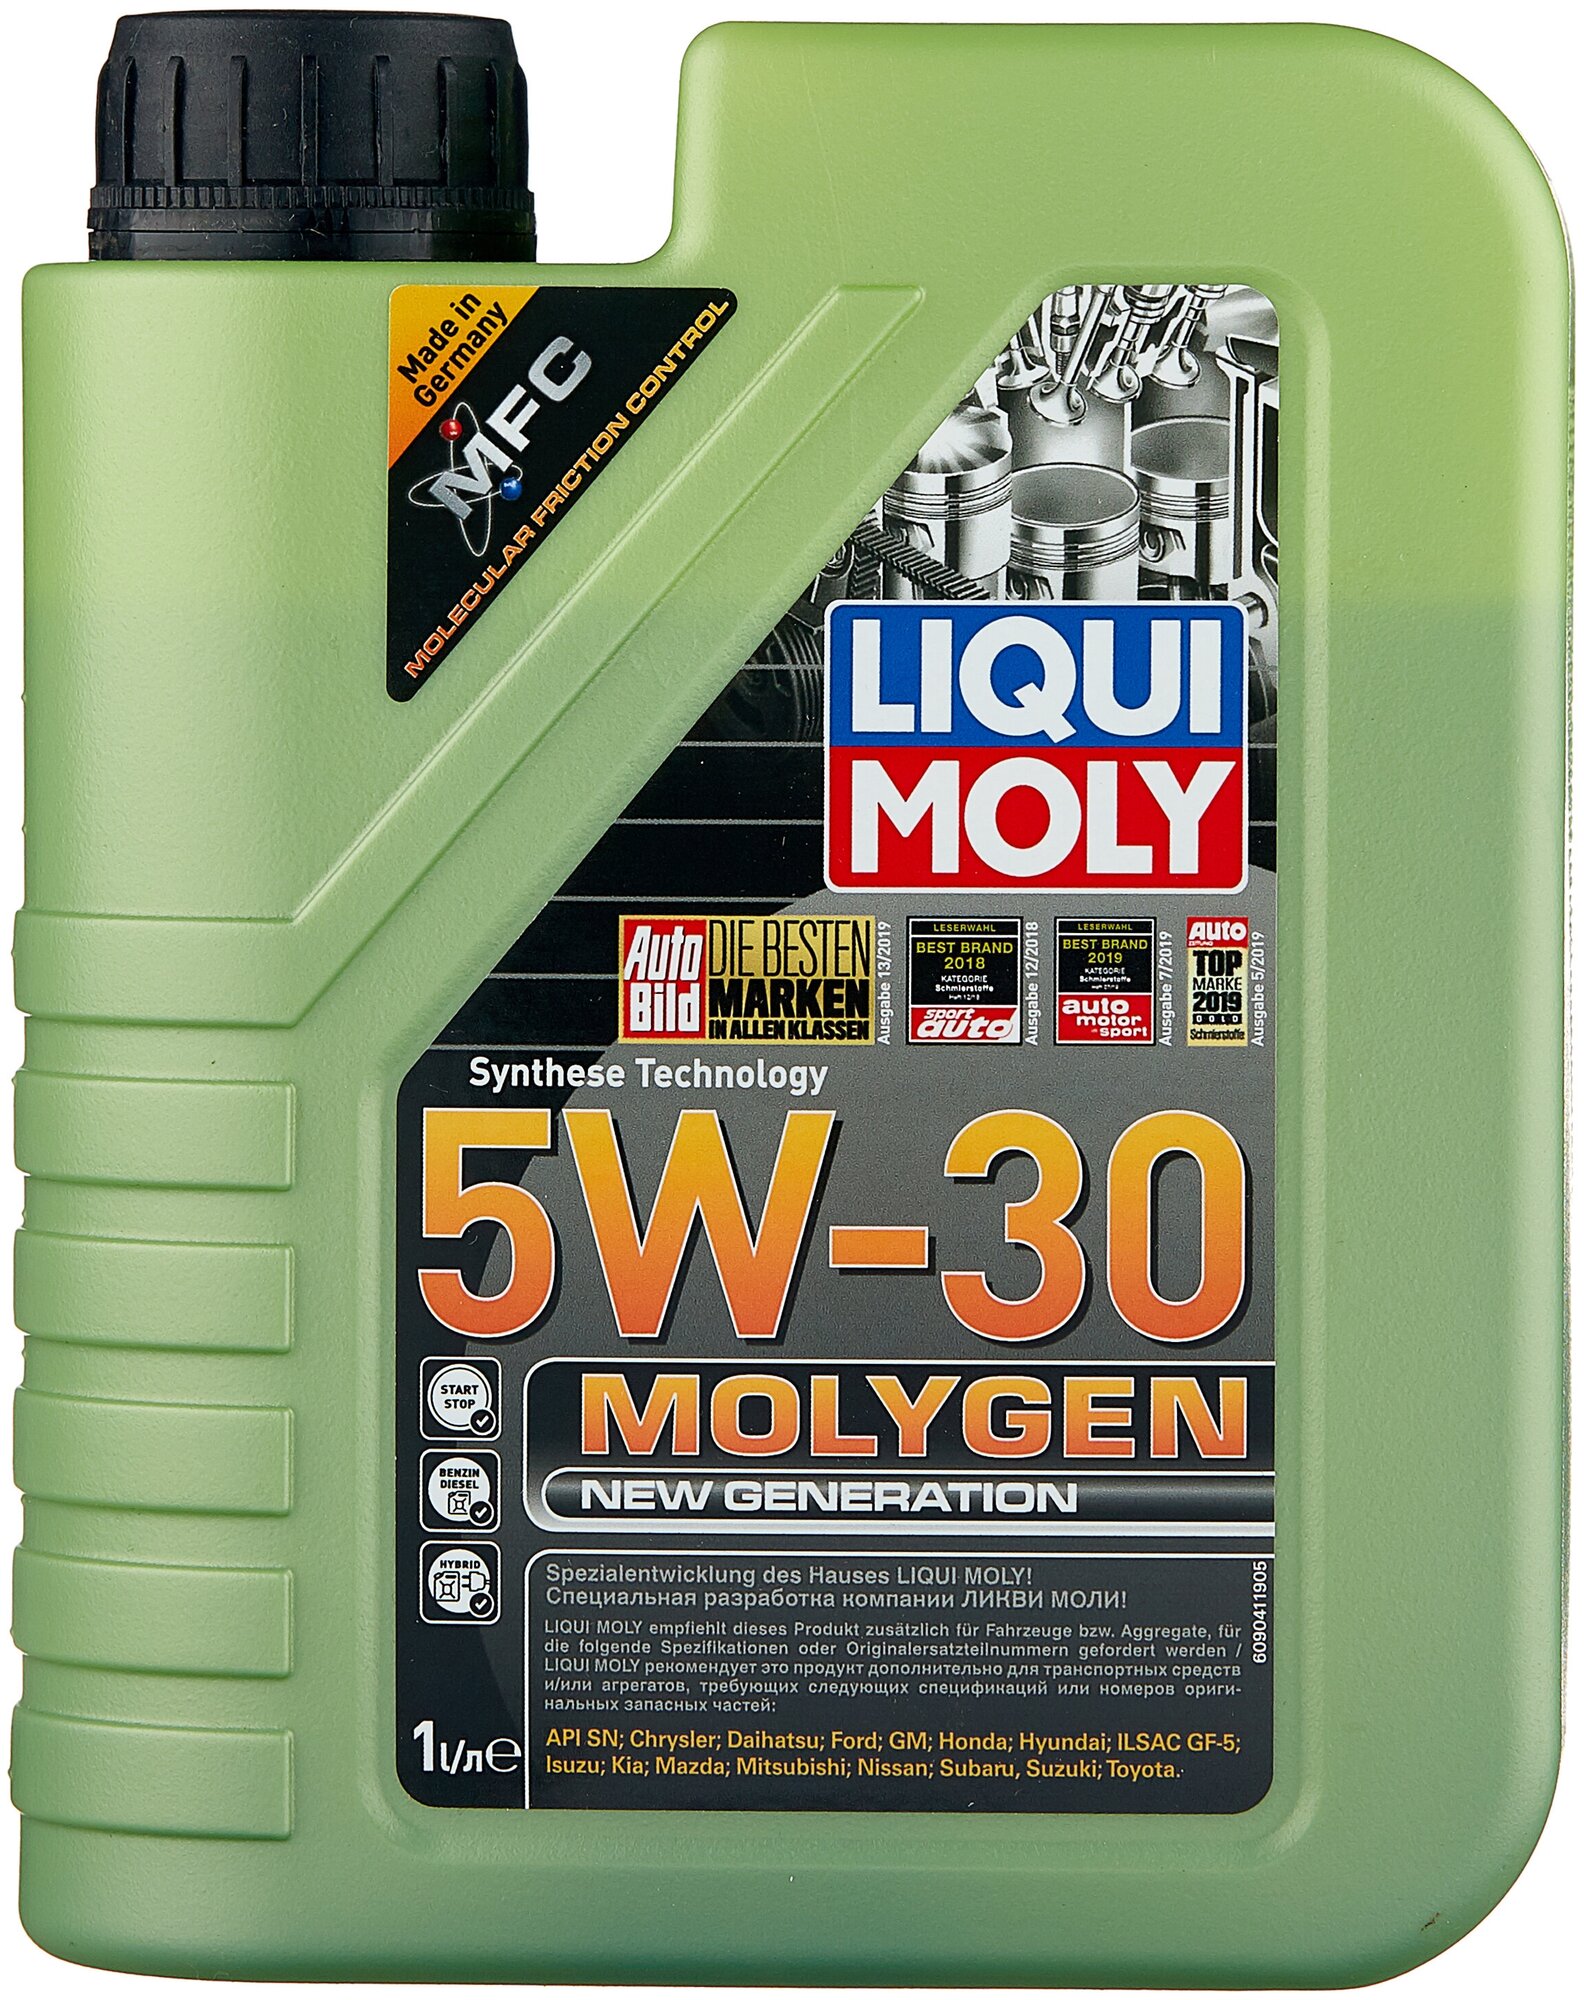 HC-синтетическое моторное масло LIQUI MOLY Molygen New Generation 5W-30, 1 л, 1 шт.